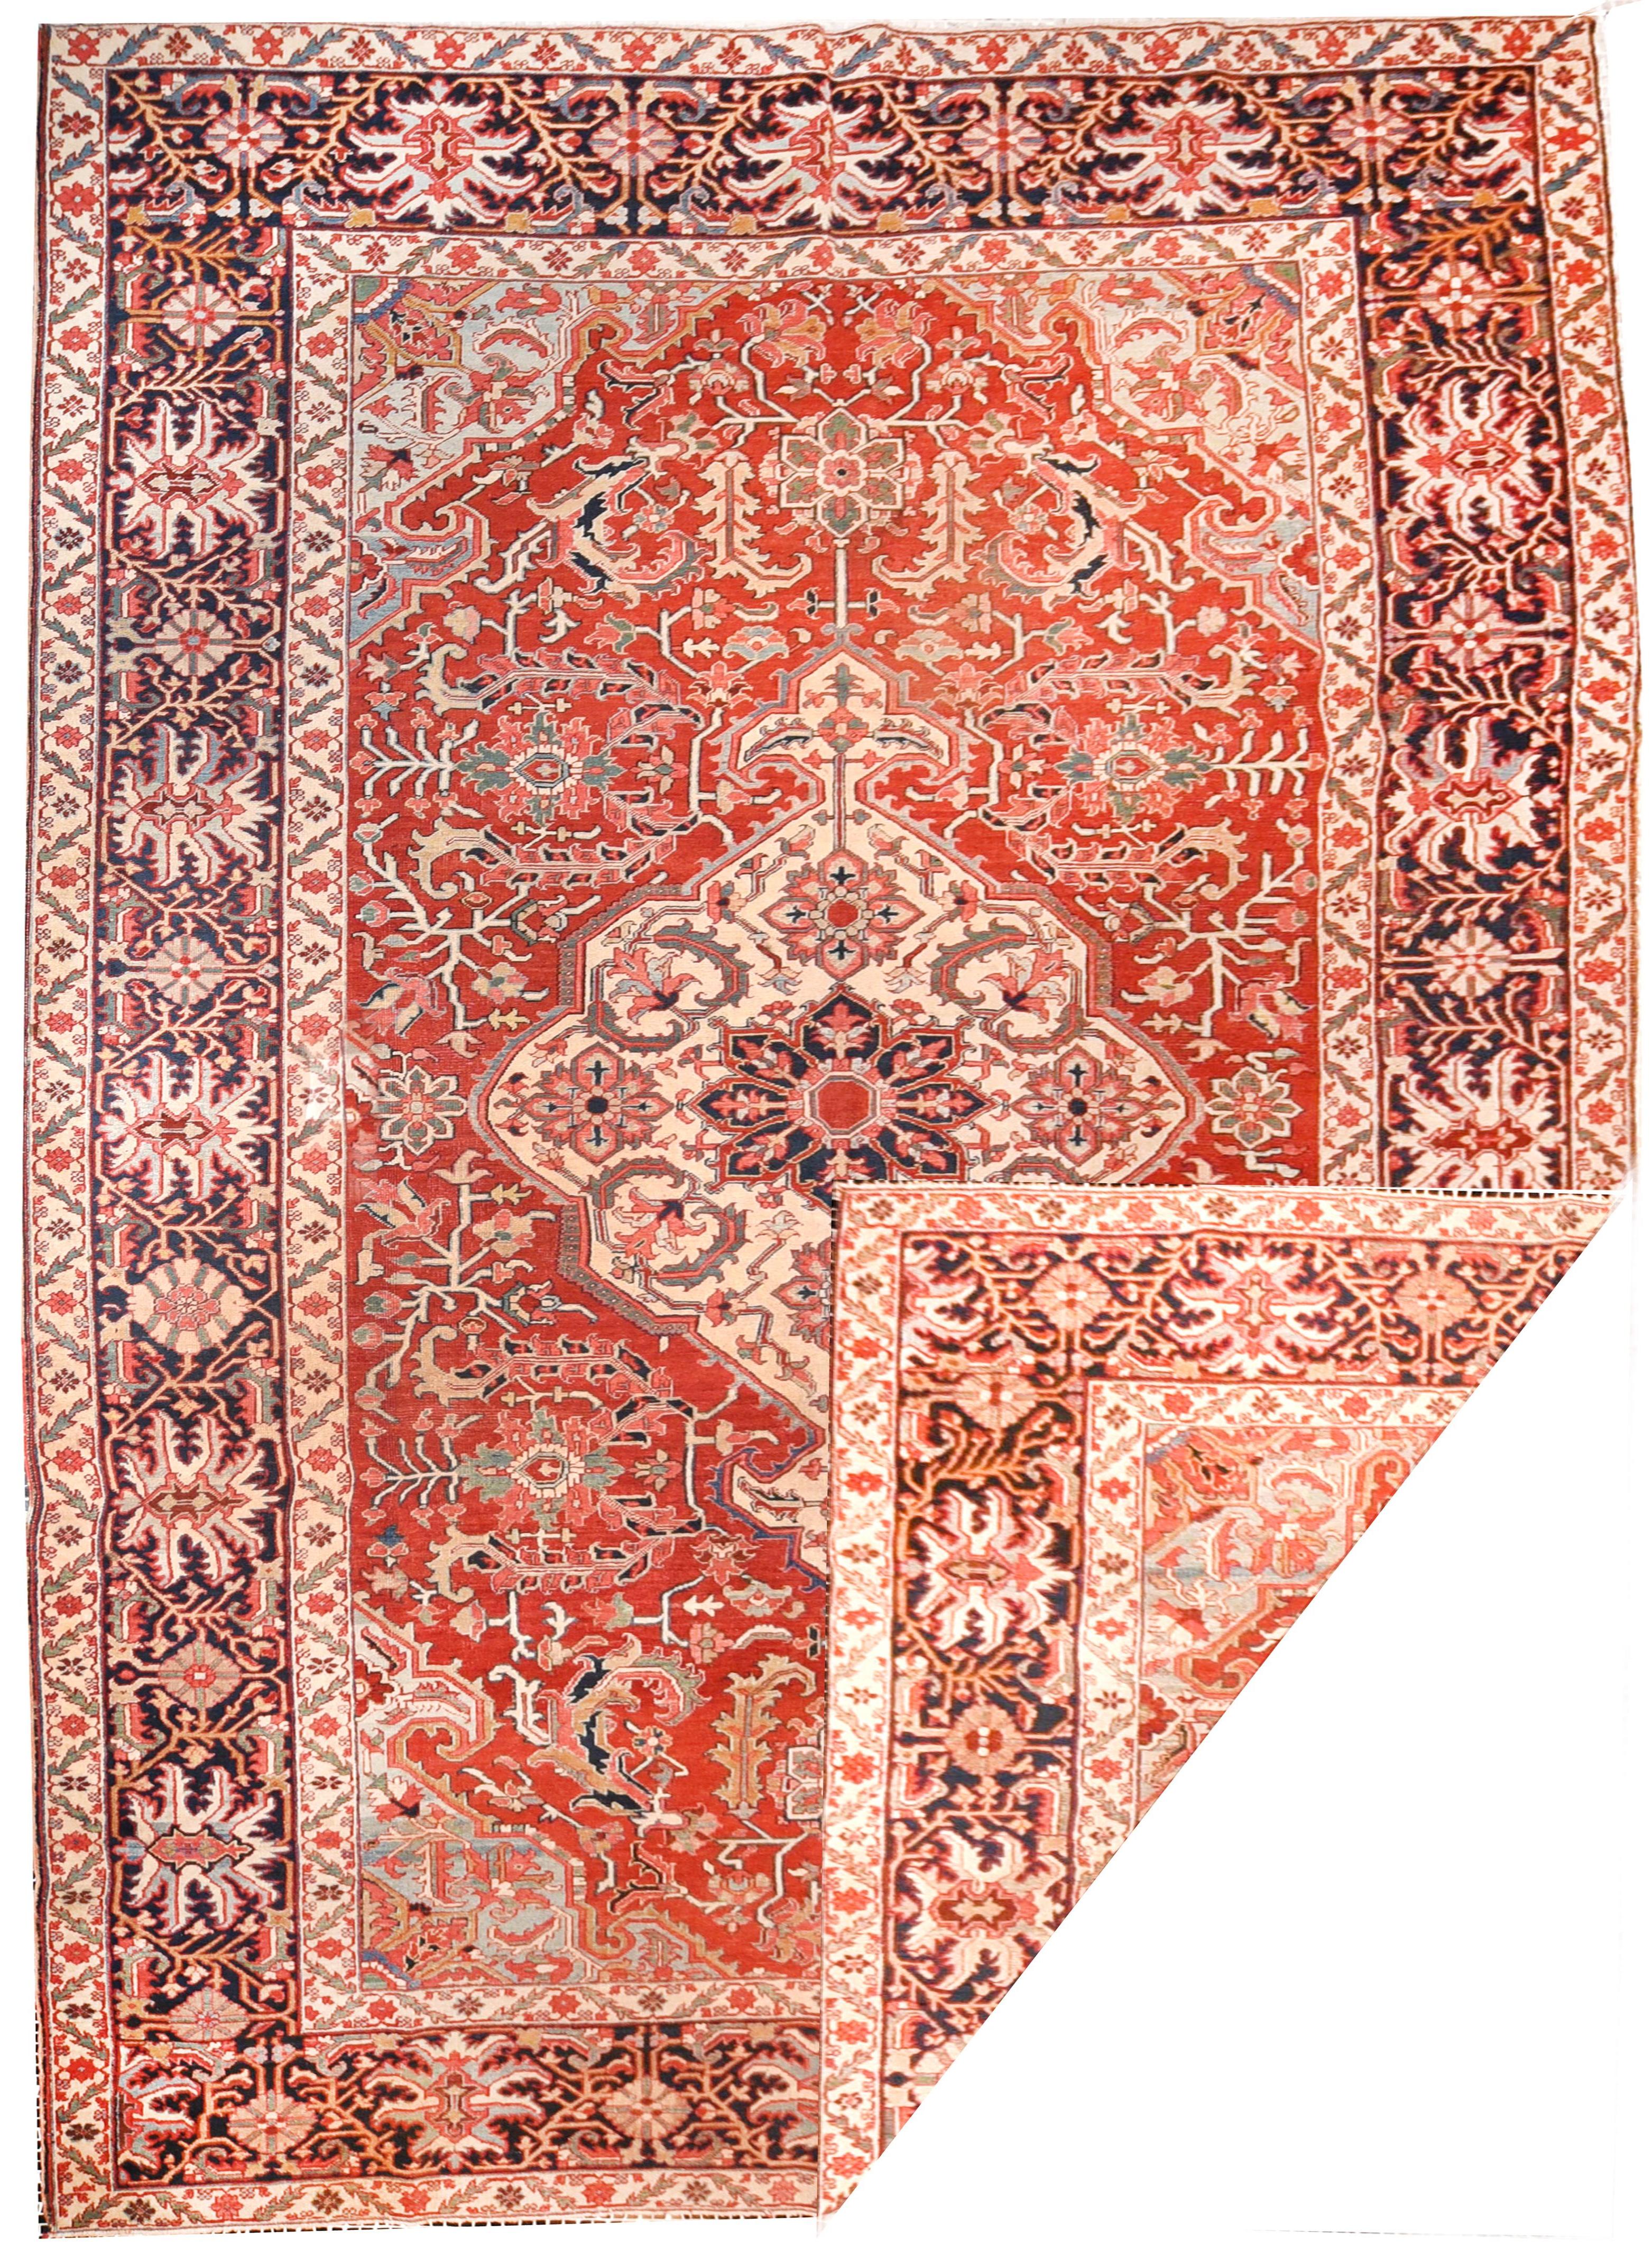 Antiker Perisan Serapi Teppich (Handgeknüpft) im Angebot